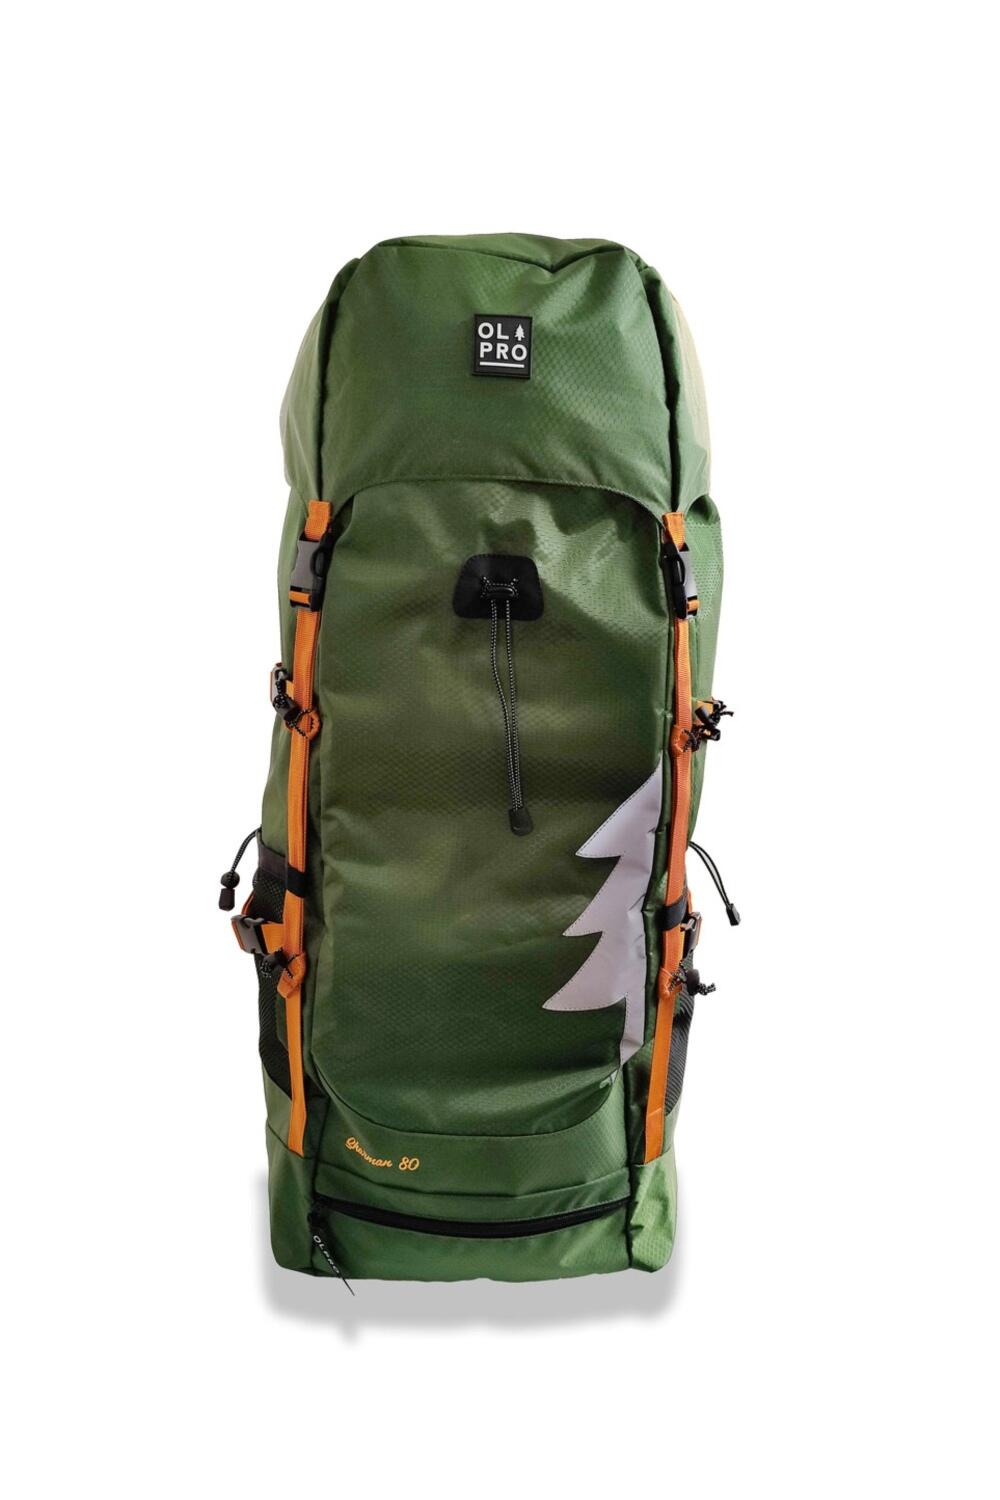 OLPRO 80L Rucksack Bag Green 4/5